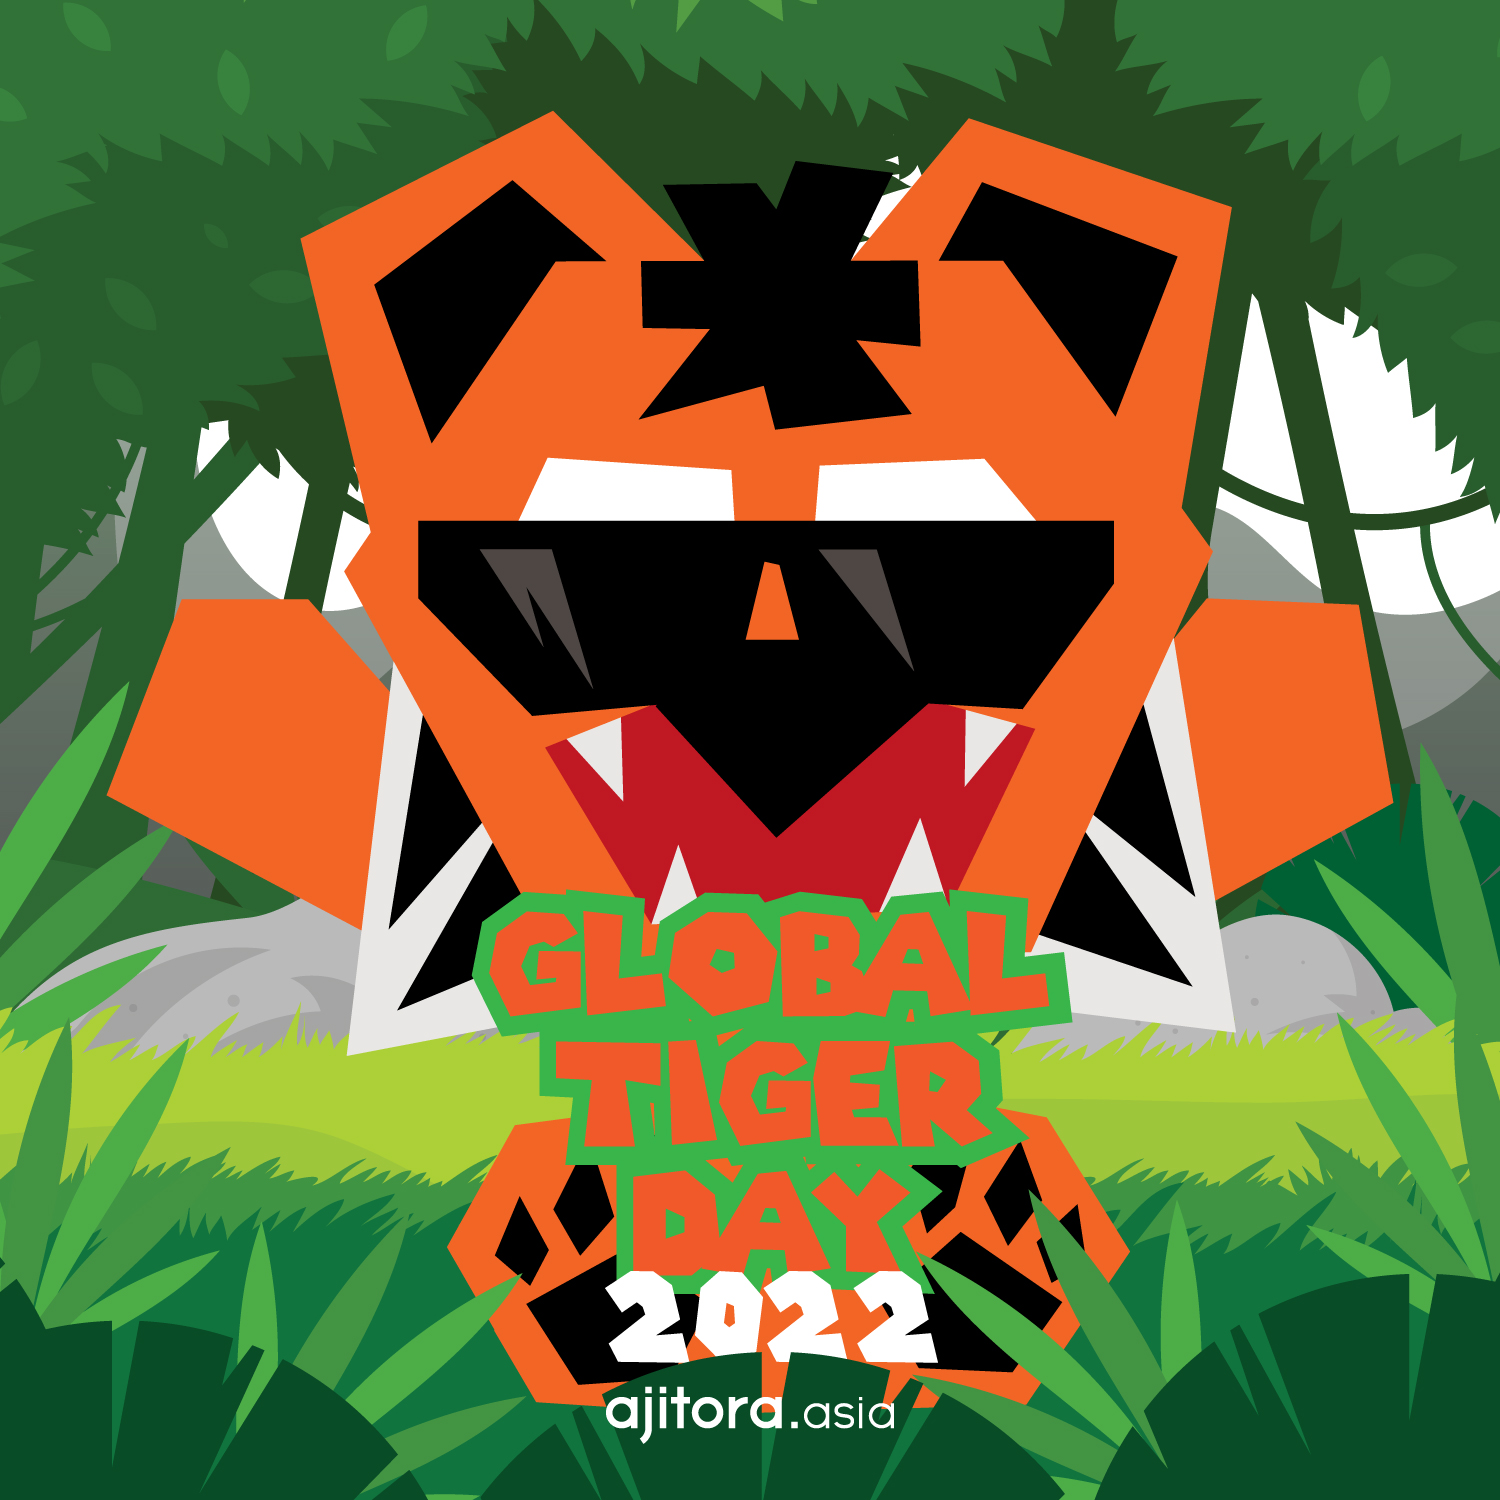 Ajitora Illustration - Global Tiger Day 2022